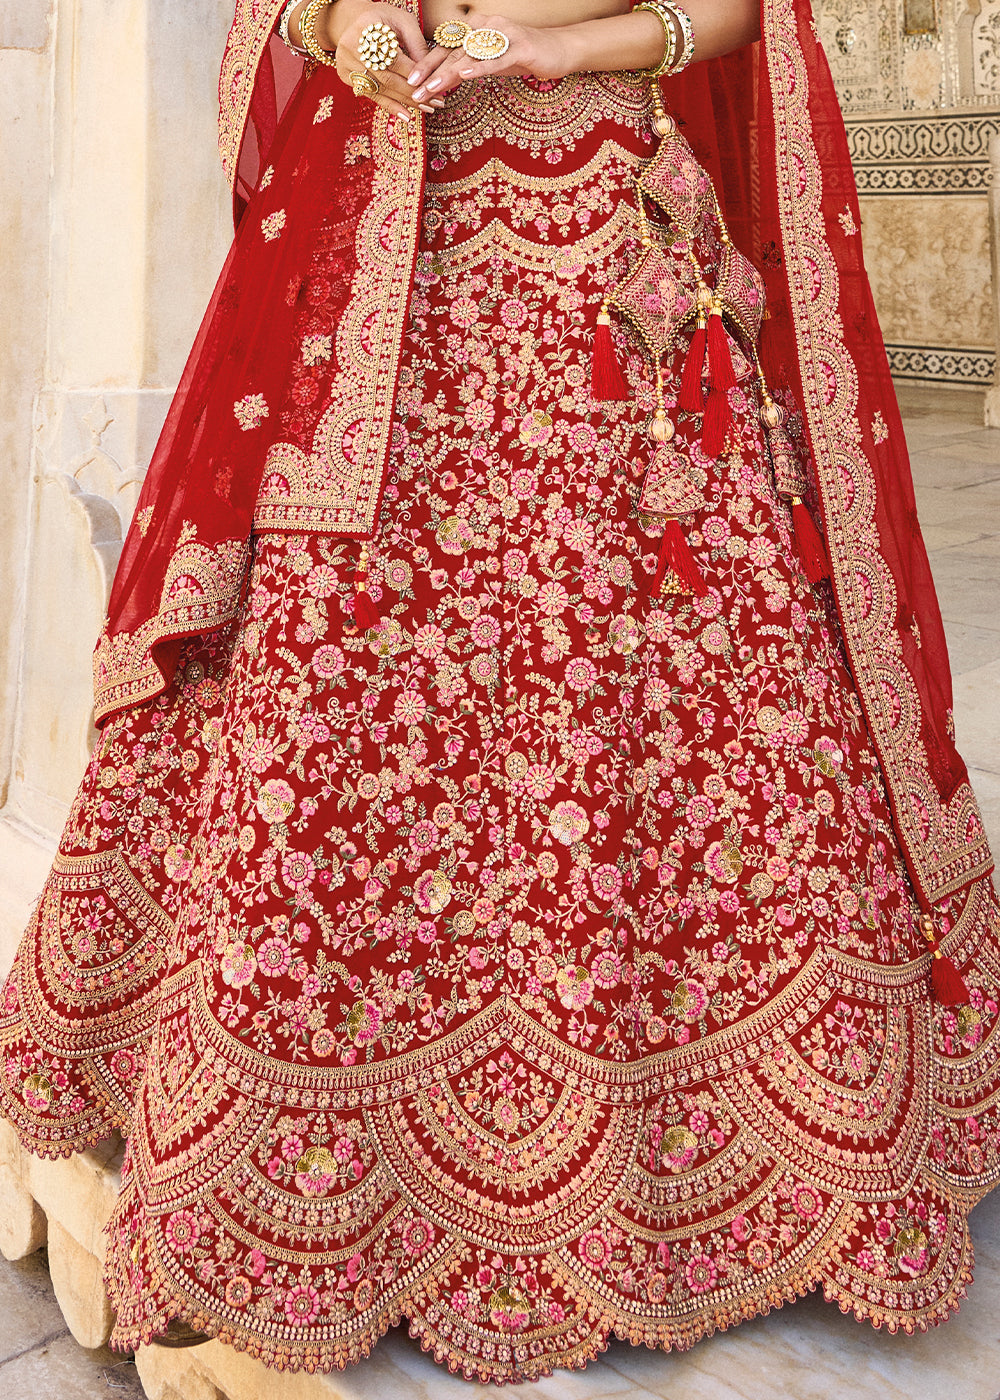 Designer Heavy Indian Bridal Wear Red Lehenga Choli | Red lehenga choli,  Indian bridal wear red, Indian bridal wear